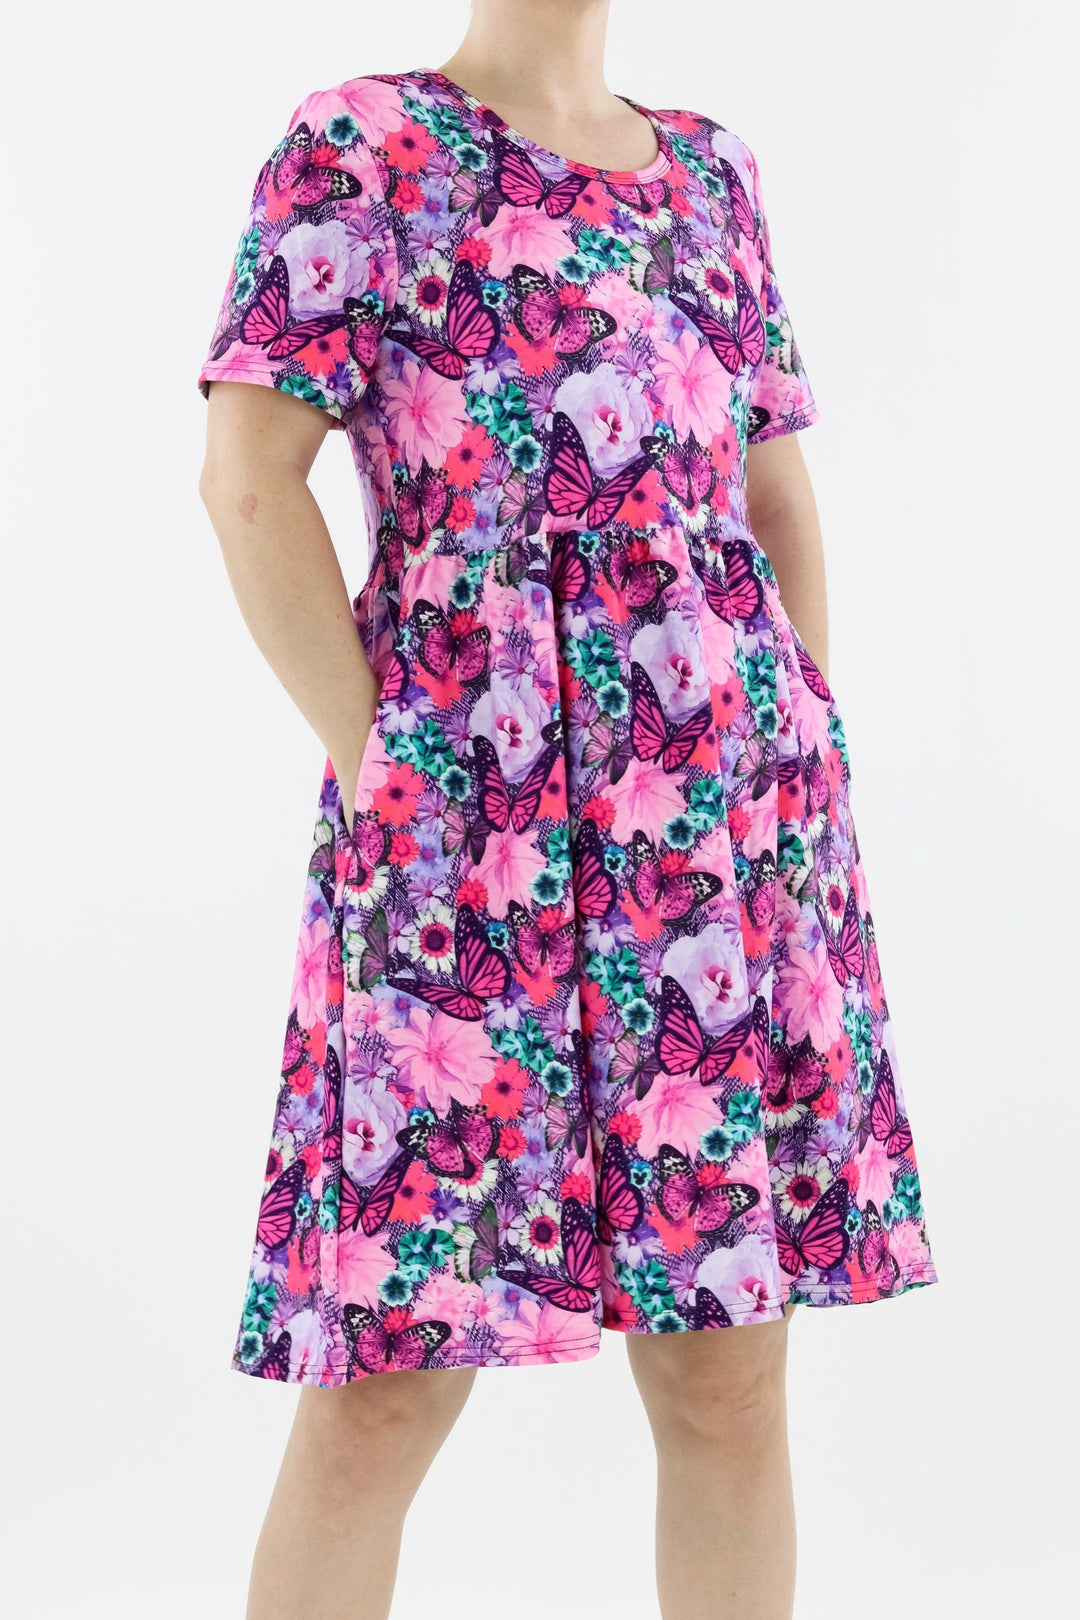 Florescence Butterfly - Short Sleeve Skater Dress - Knee Length - Side Pockets Knee Length Skater Dress Pawlie   